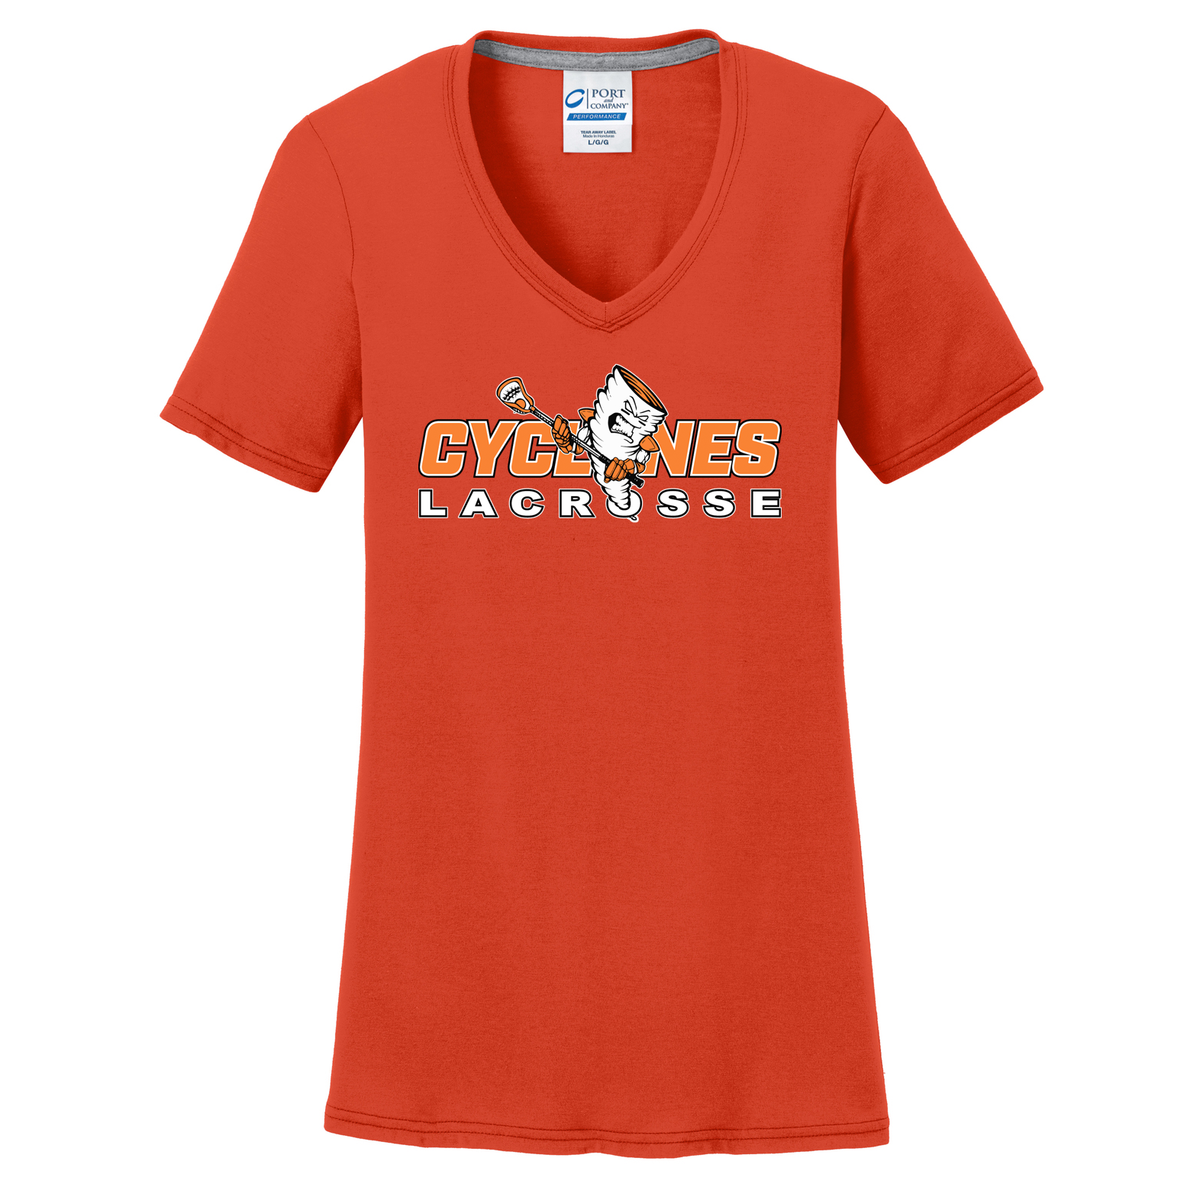 Cyclones Lacrosse Women's T-Shirt